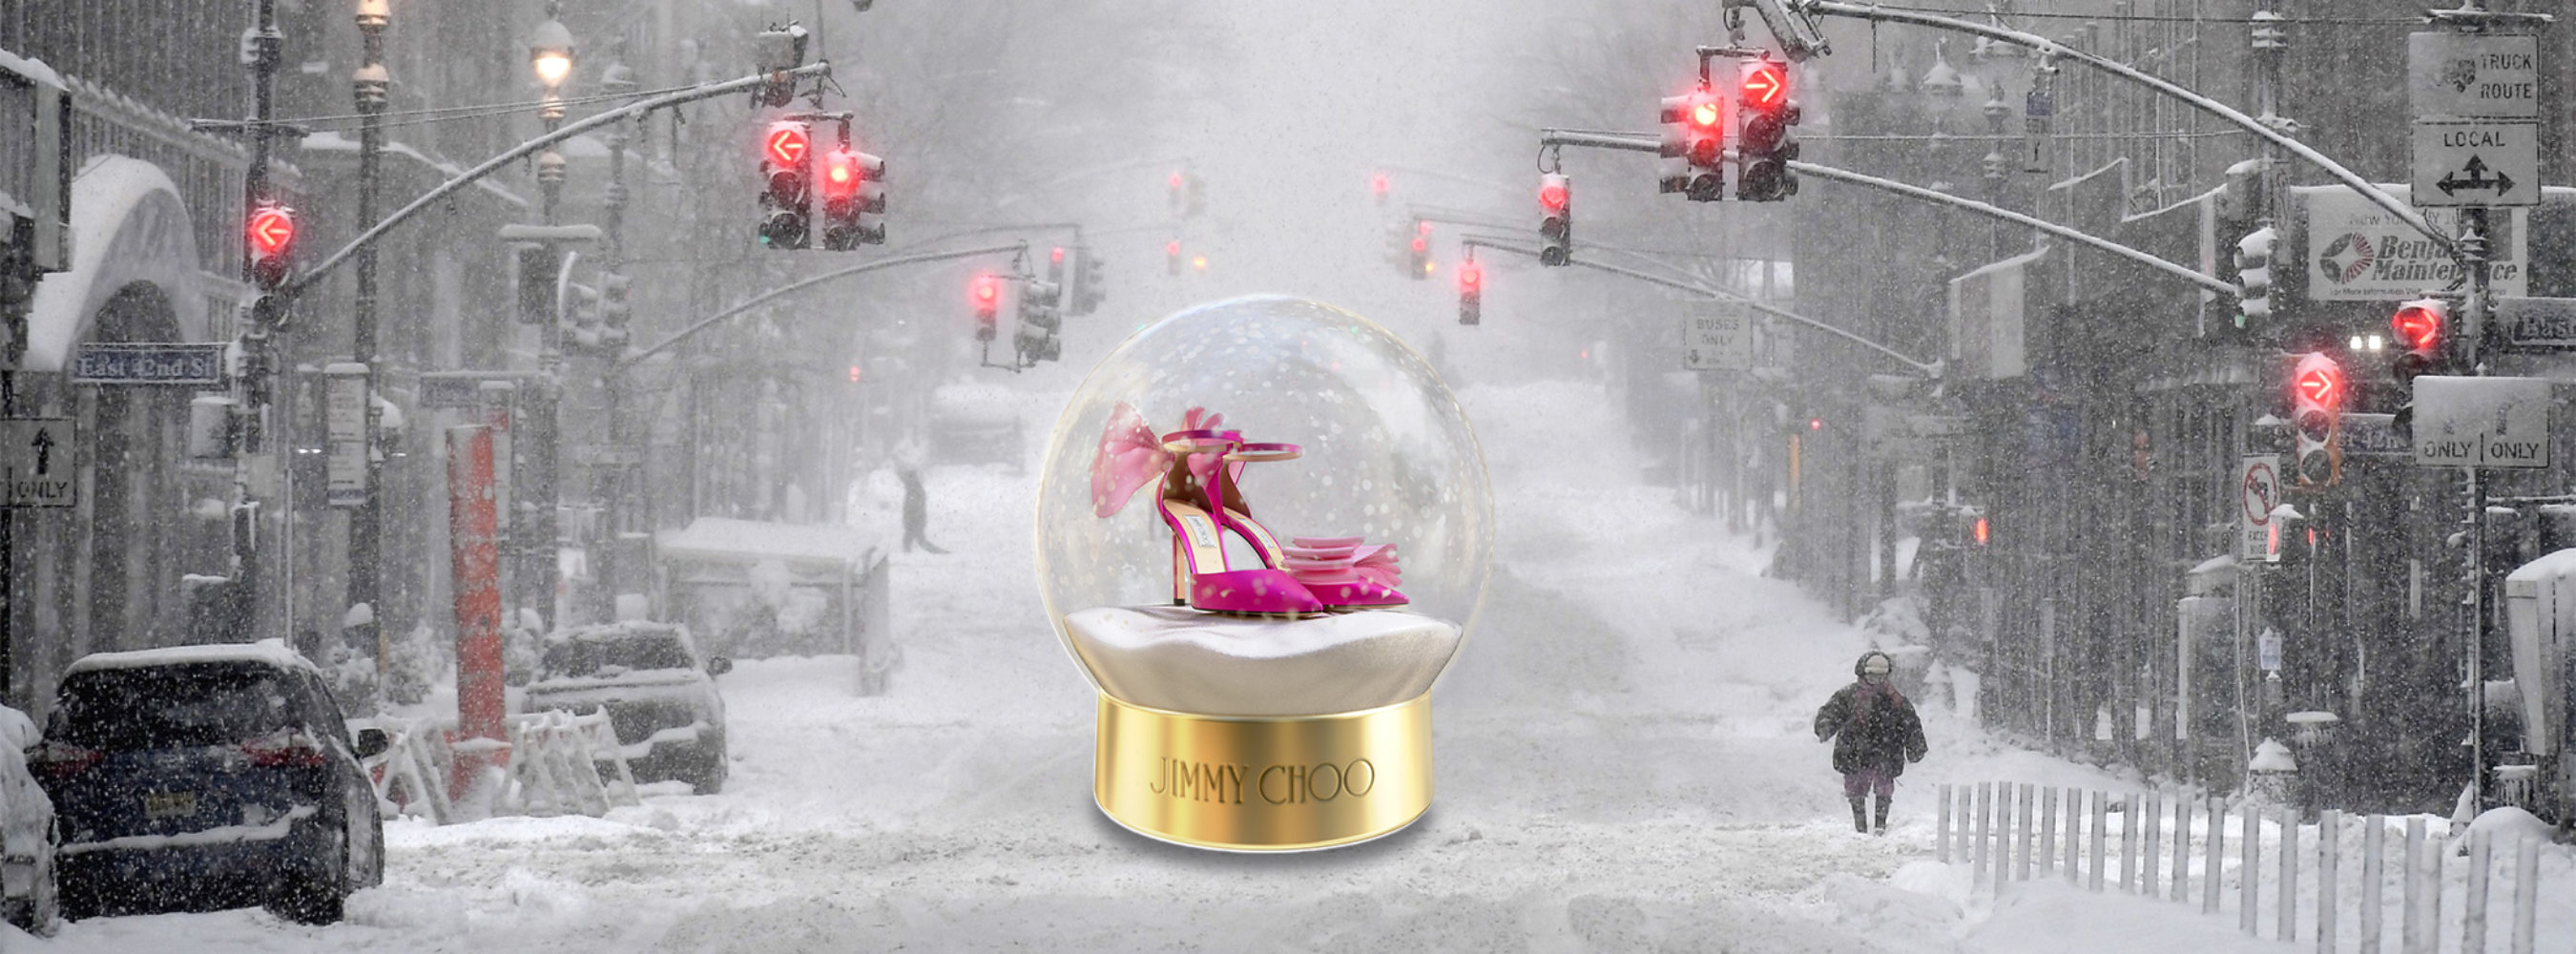 Jimmy Choo Christmas Snow Globe